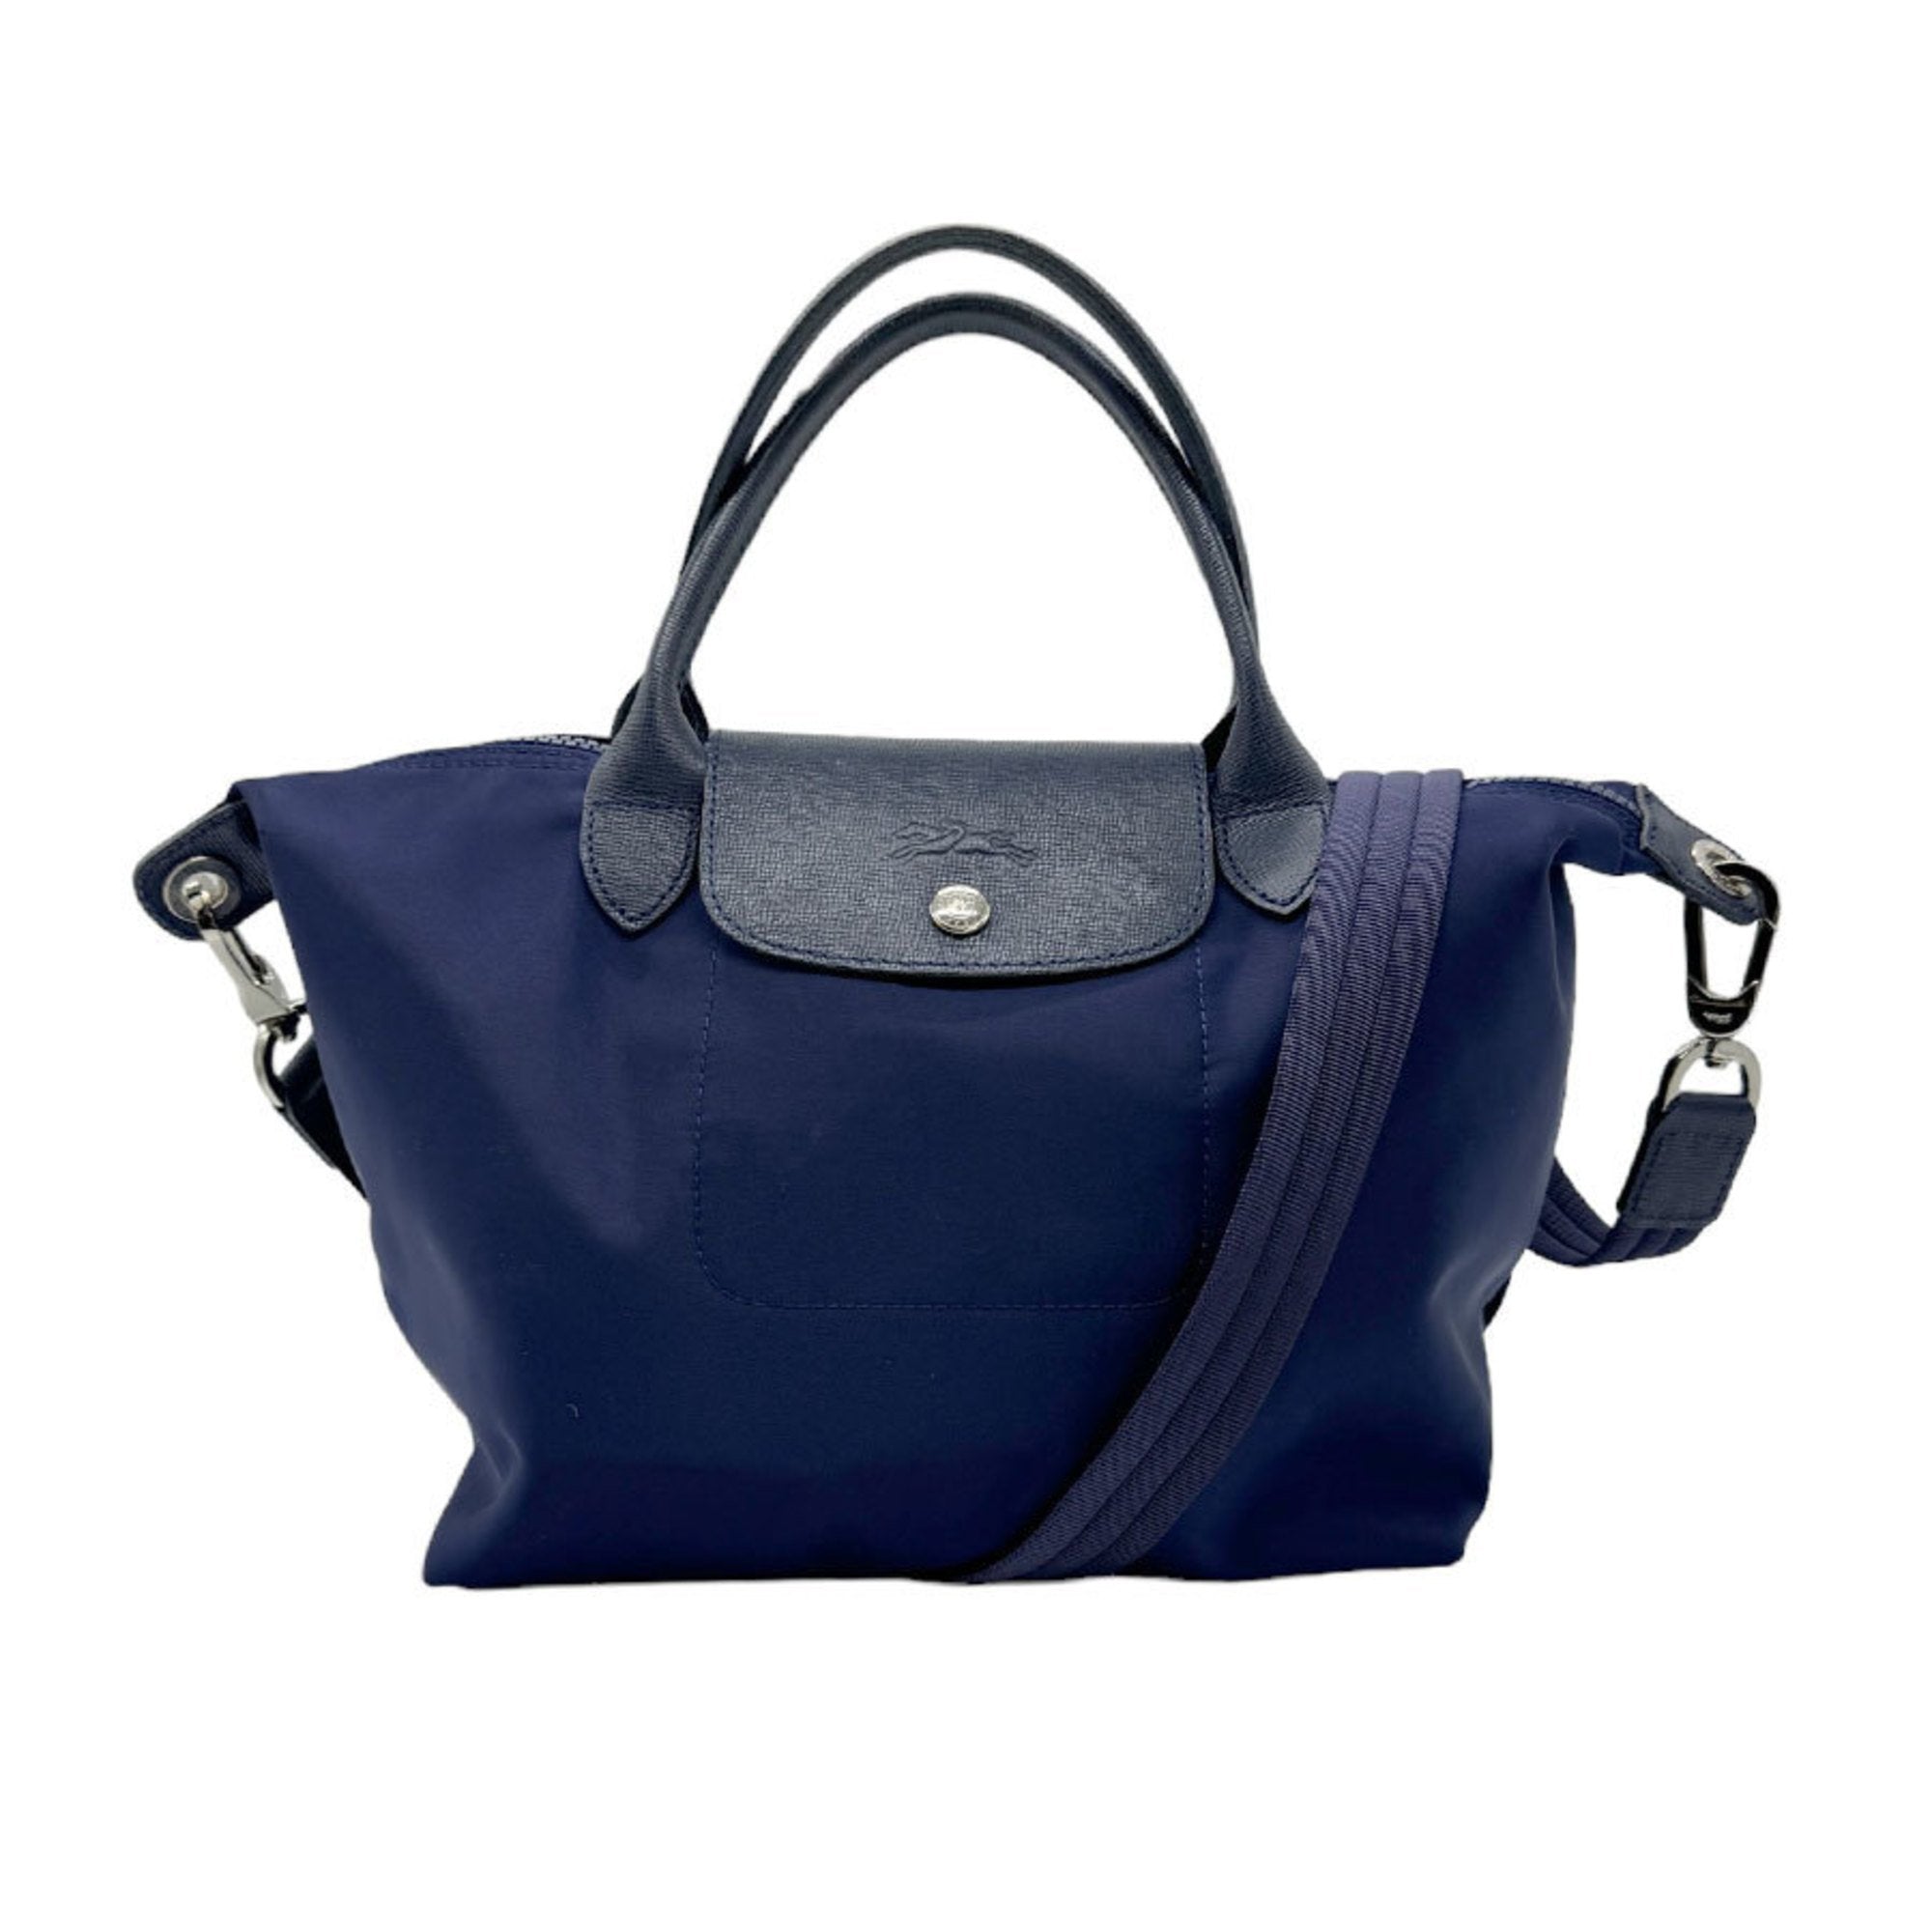 Handbag Shoulder Bag Pliage Nylon Navy Women's Z0653